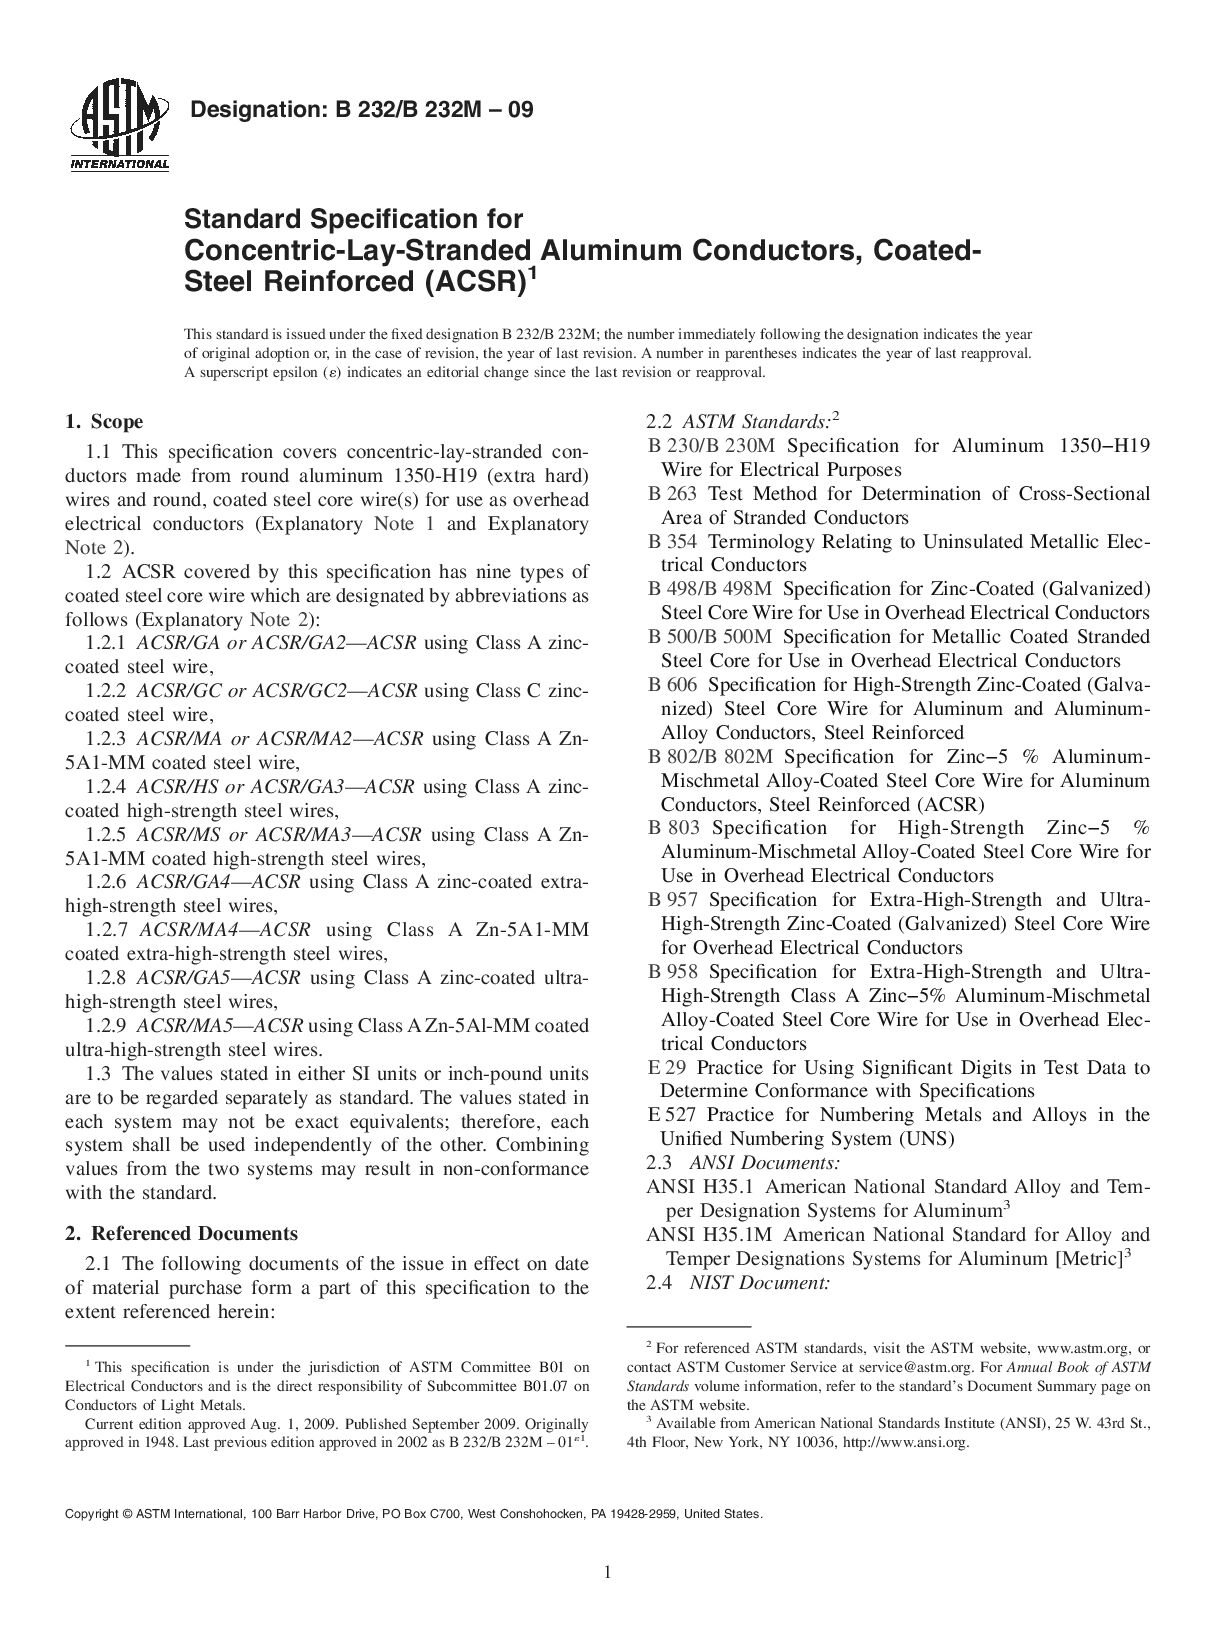 ASTM B232/B232M-09封面图